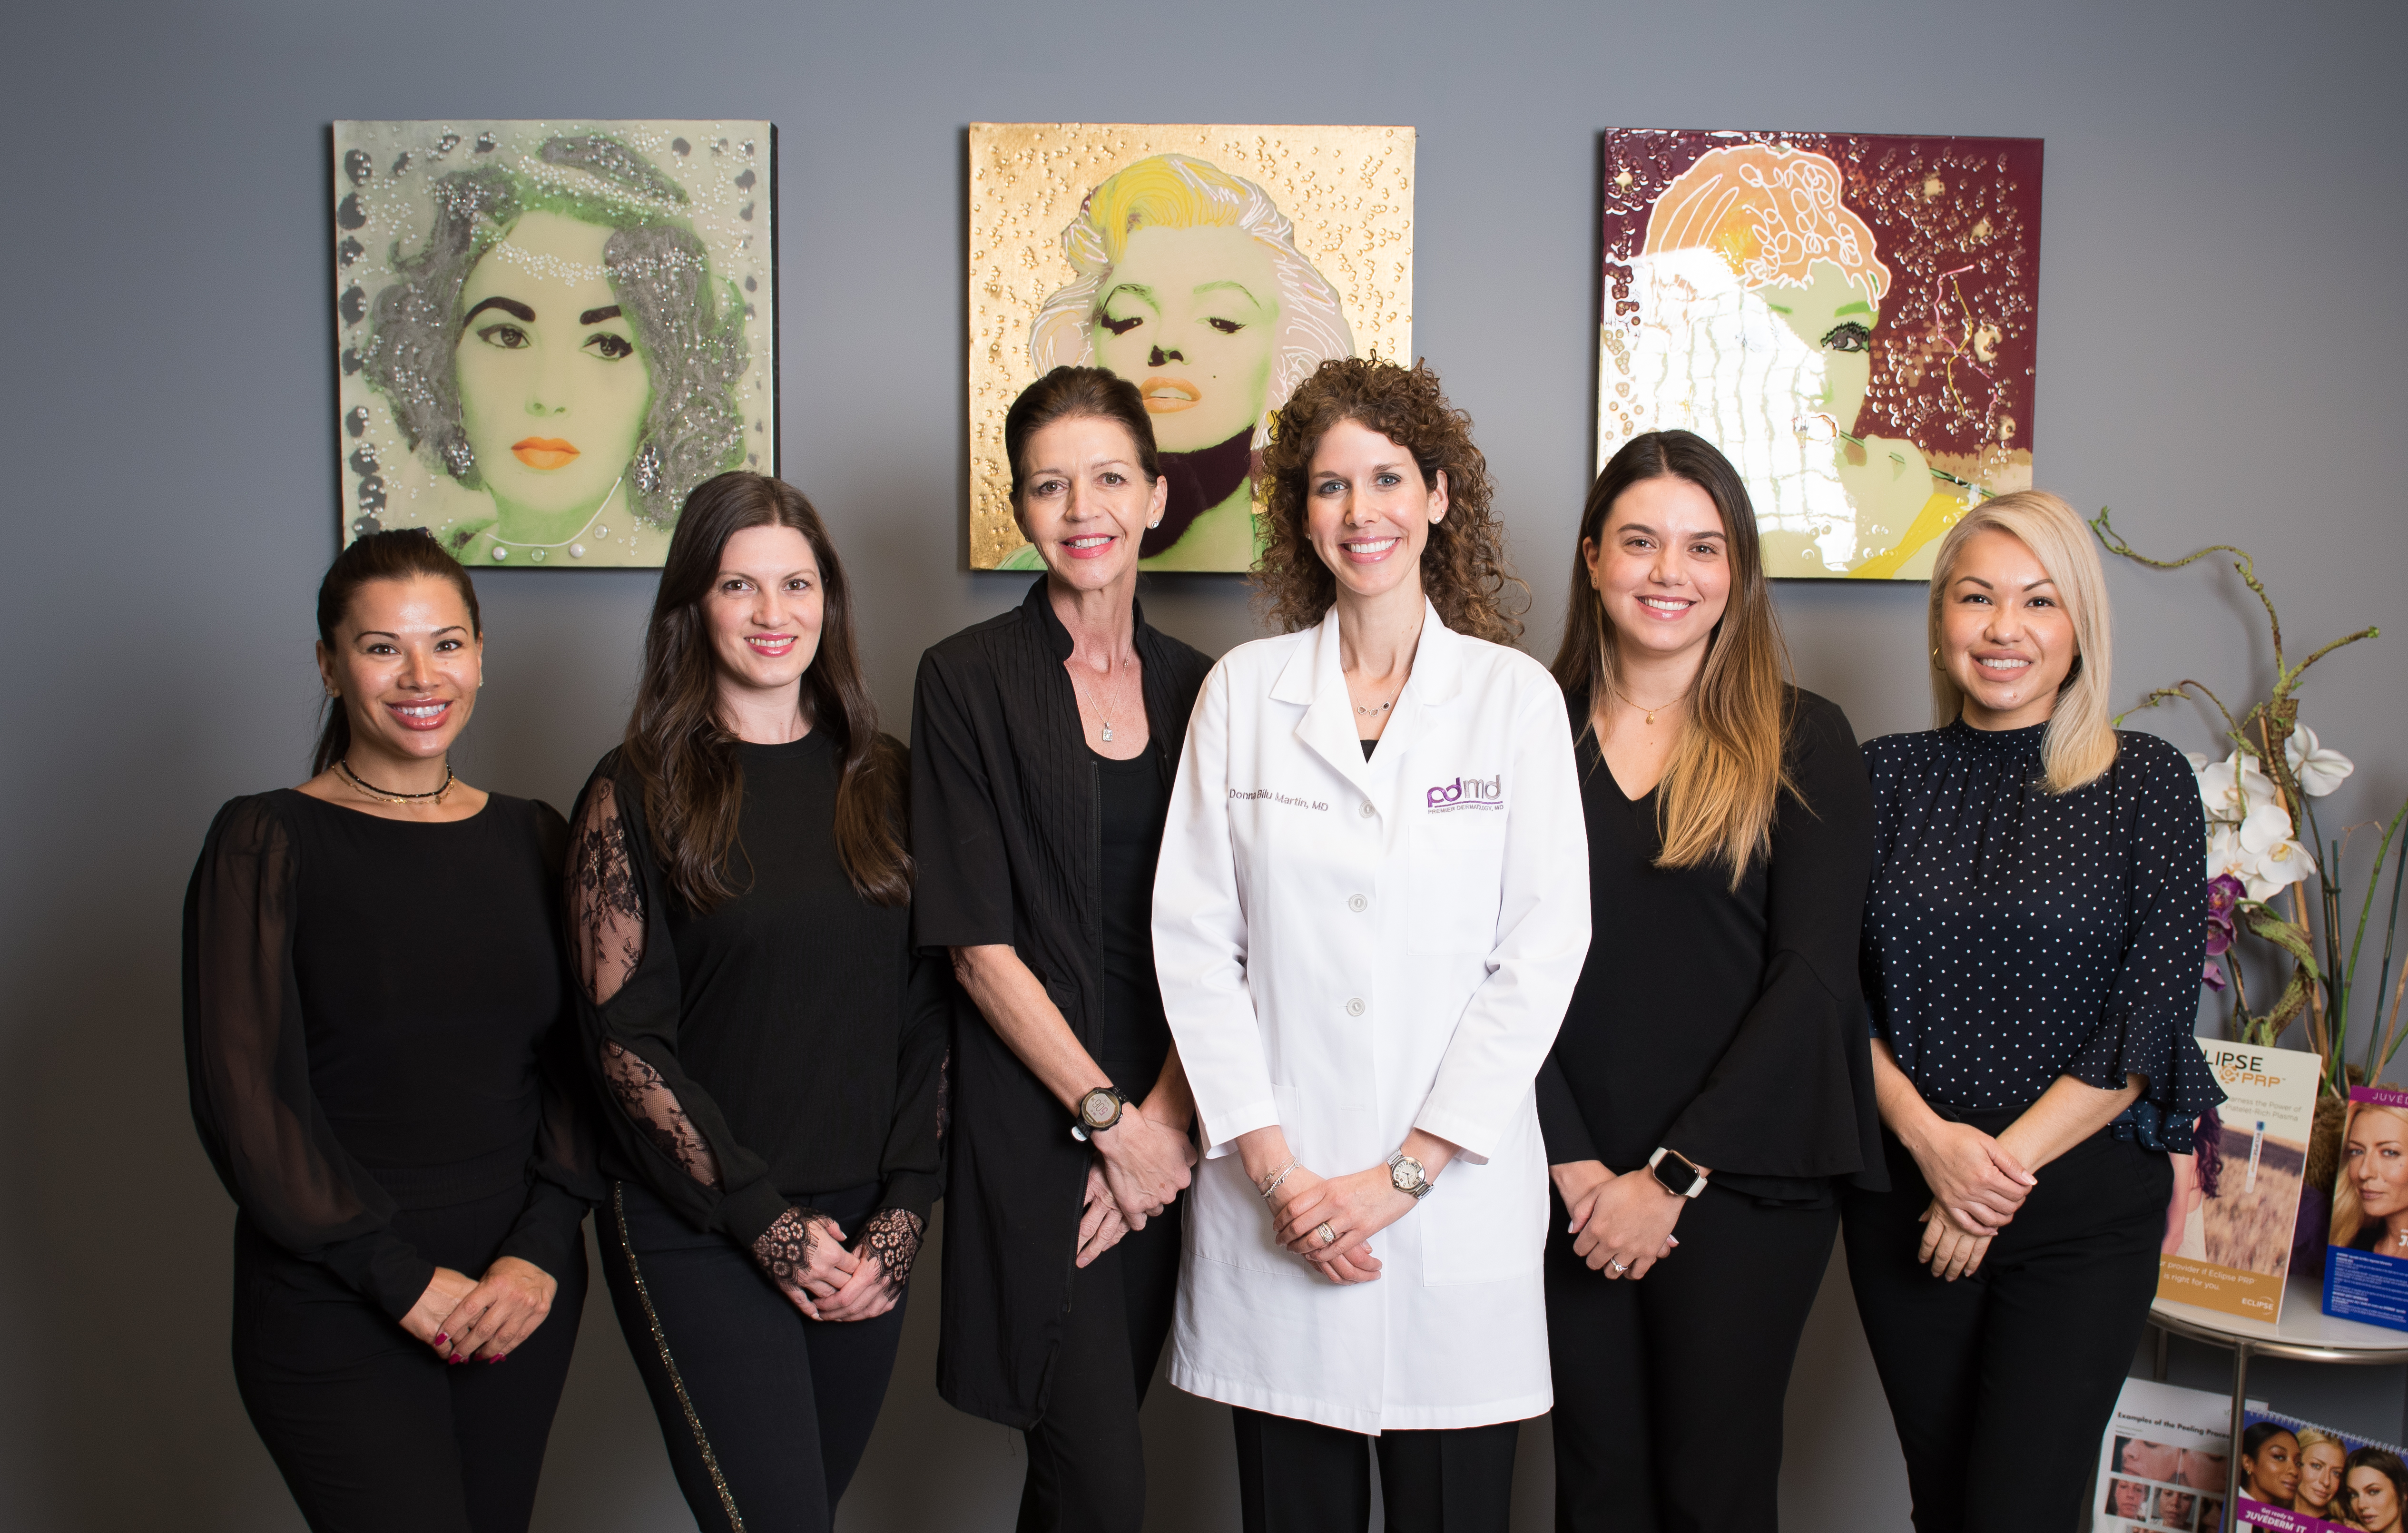 The fabulous staff at Premier Dermatology, MD